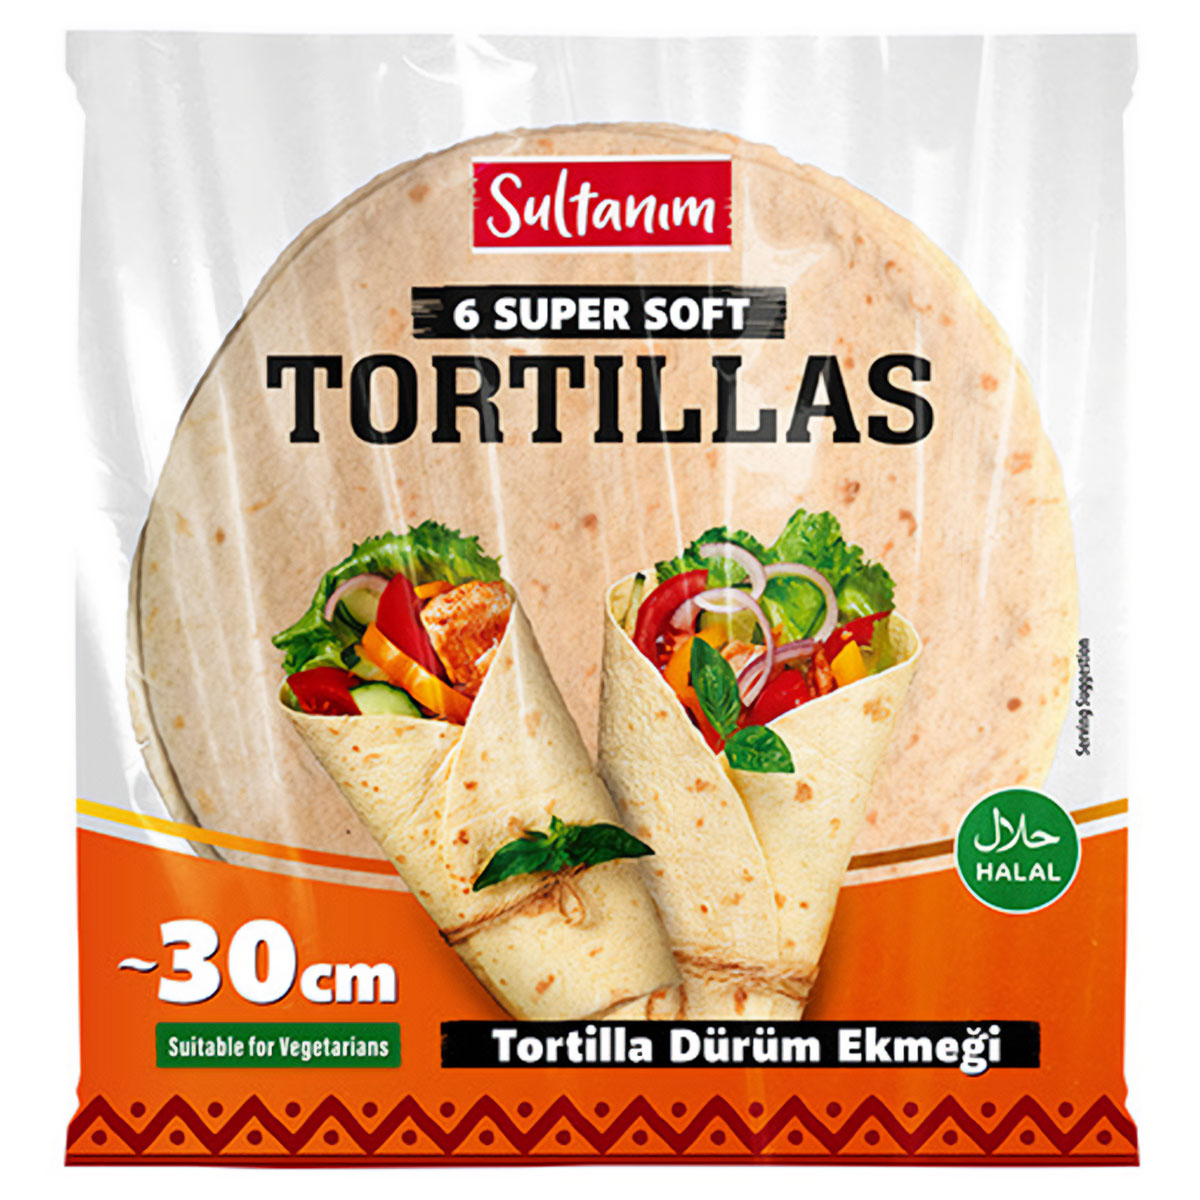 Sultanim - Super Soft Tortilla Wrap Bread 30cm - 6 Pack.